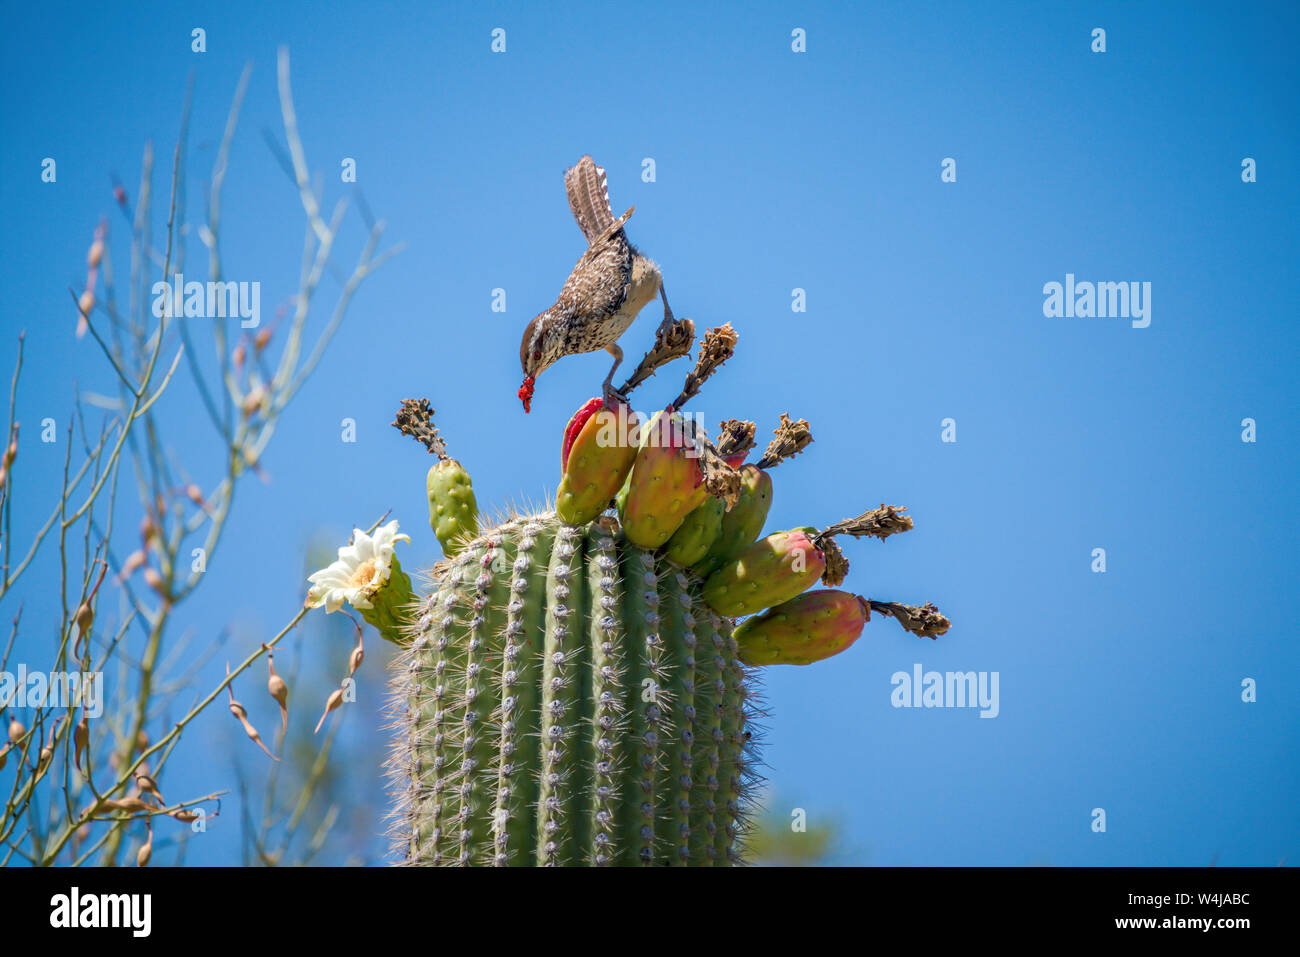 Cactus Wren eating Saguaro Cactus Fruit on top against sky Stock Photo